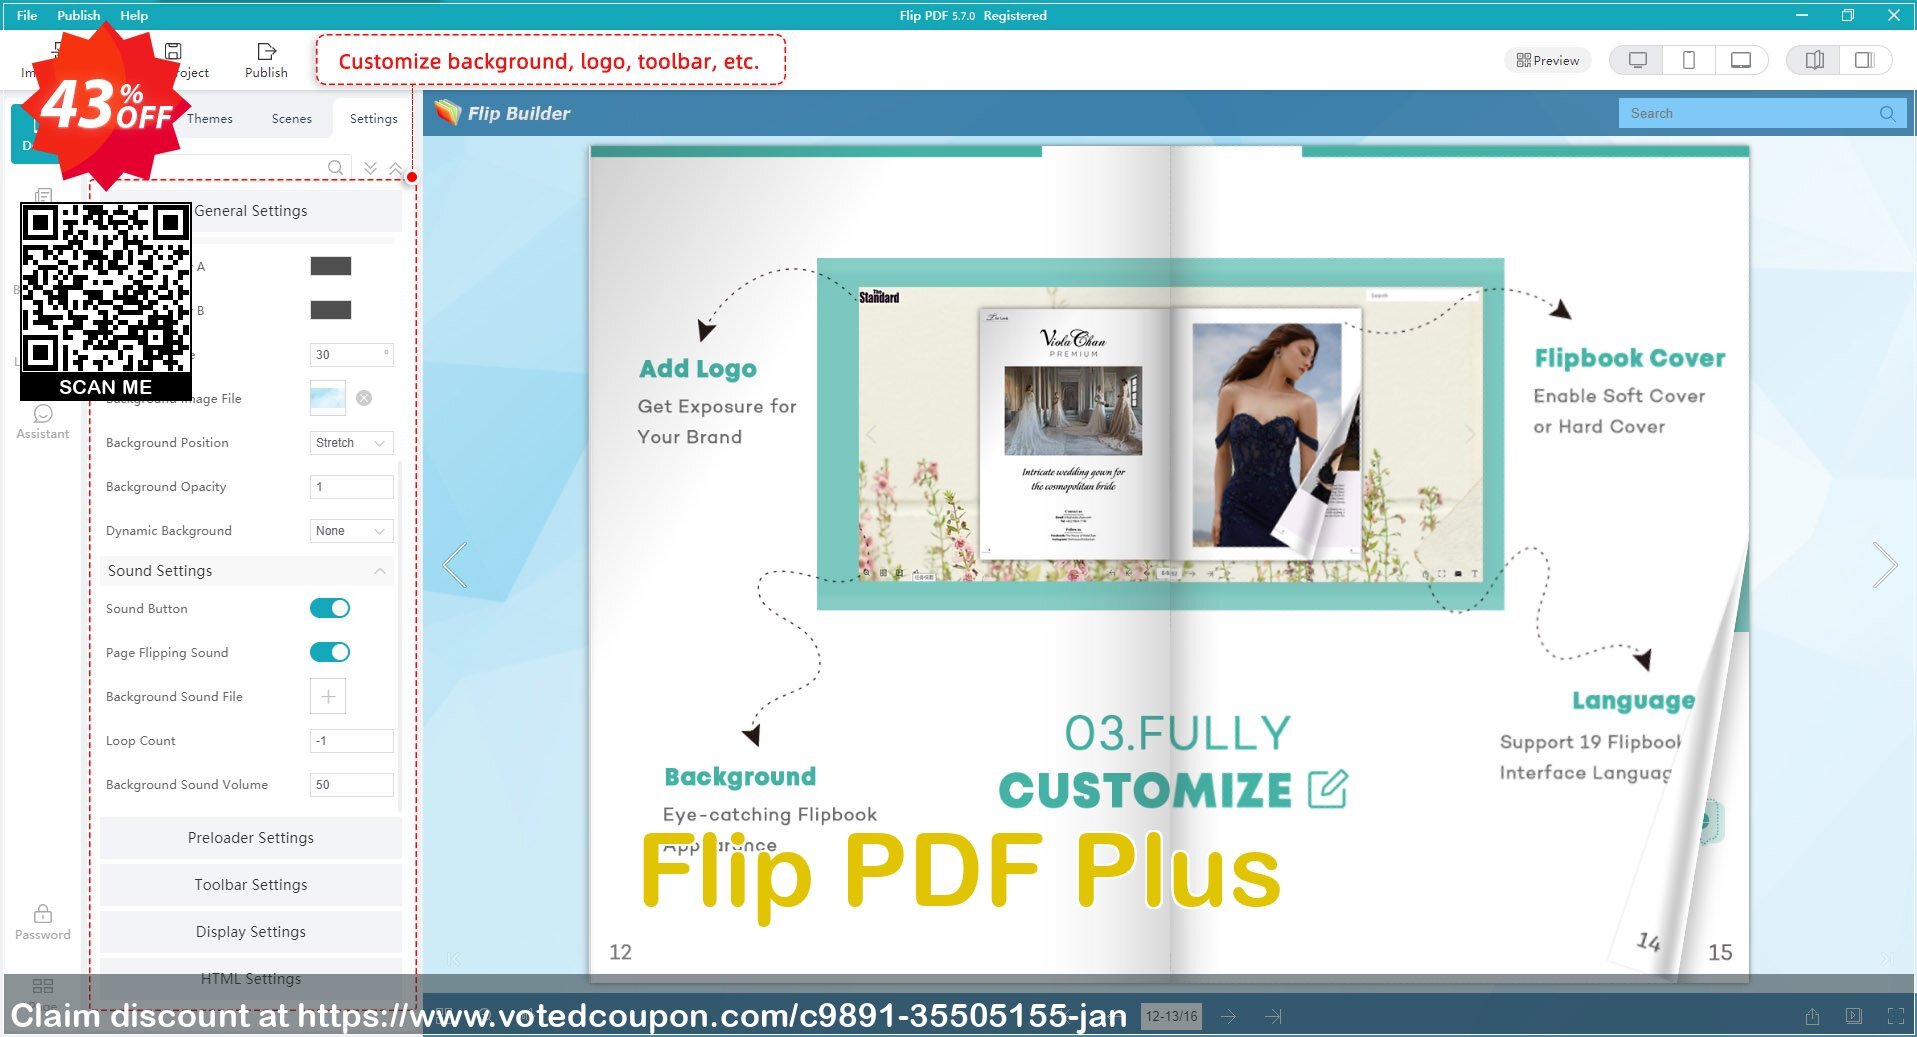 Flip PDF Plus Coupon, discount 30% OFF Flip PDF Plus, verified. Promotion: Wonderful discounts code of Flip PDF Plus, tested & approved